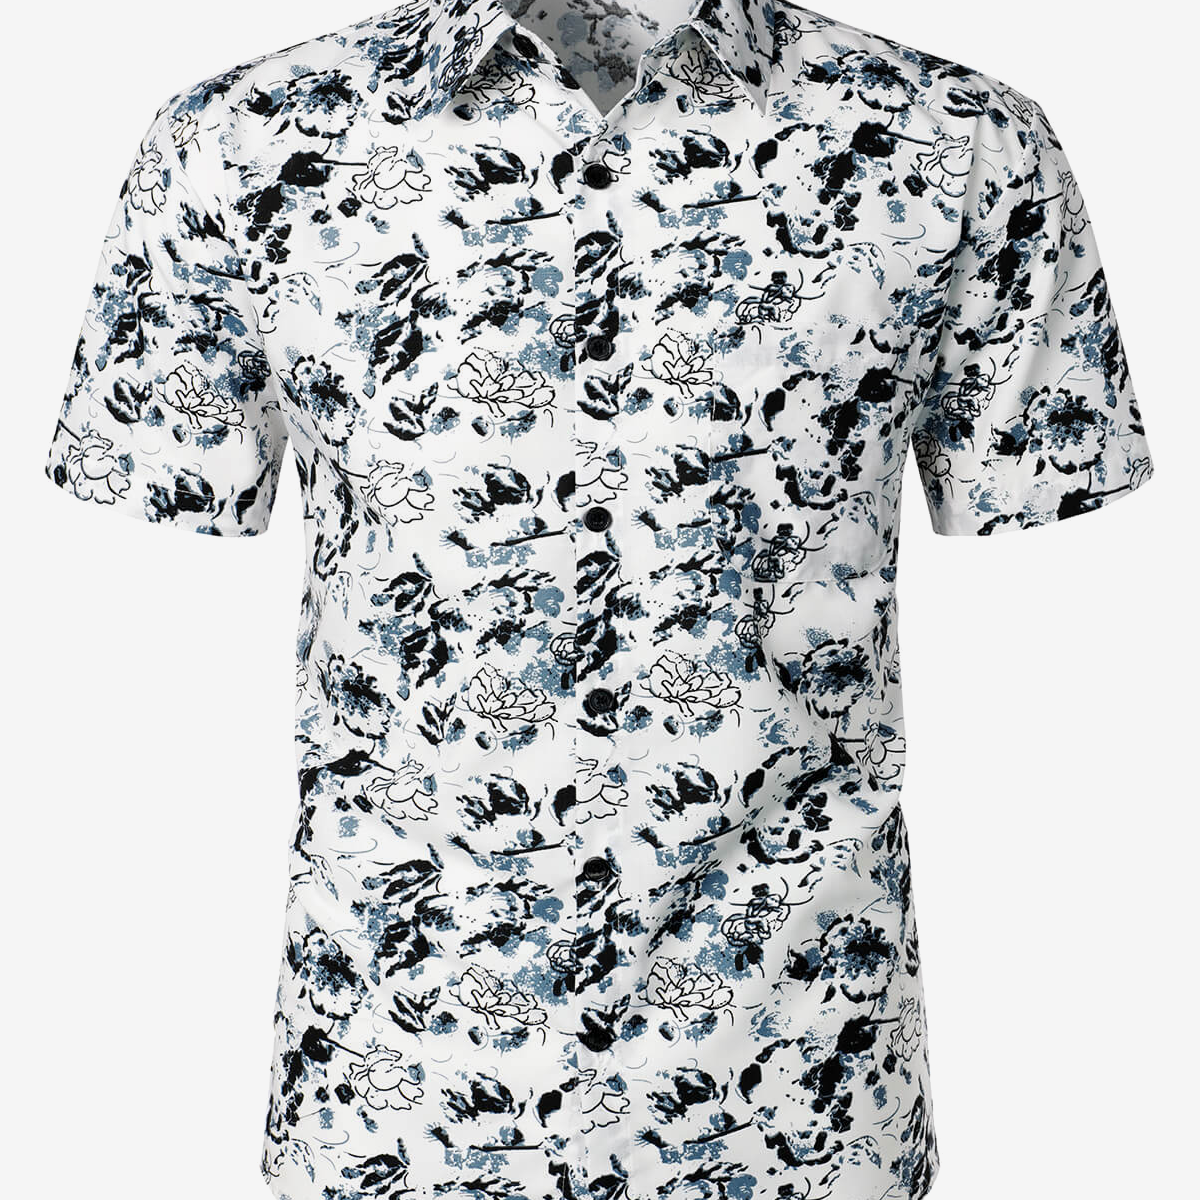 Men's White and Black Floral Summer Flower Button Up Cotton Short Sleeve Shirt